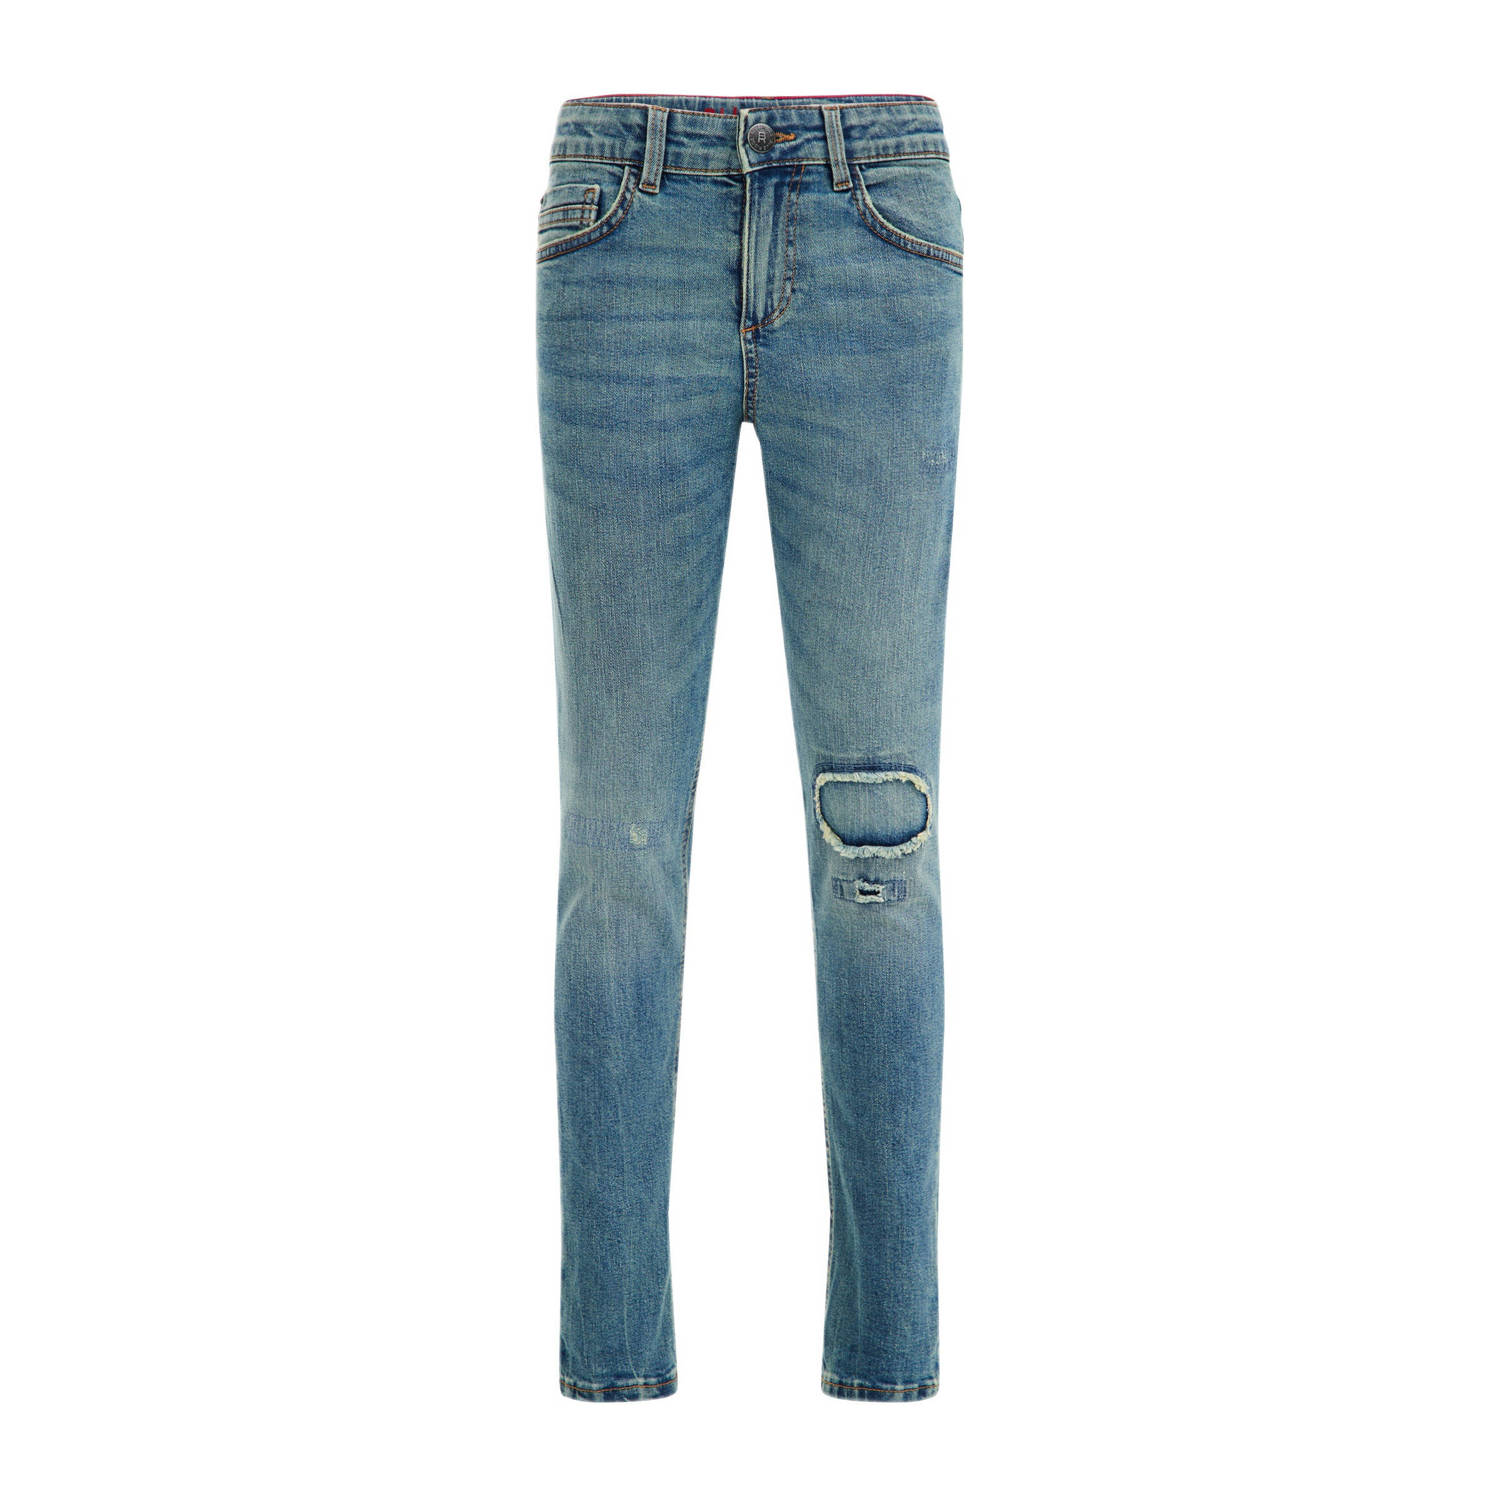 WE Fashion Blue Ridge slim fit jeans destroyed denim Blauw Jongens Stretchdenim 110